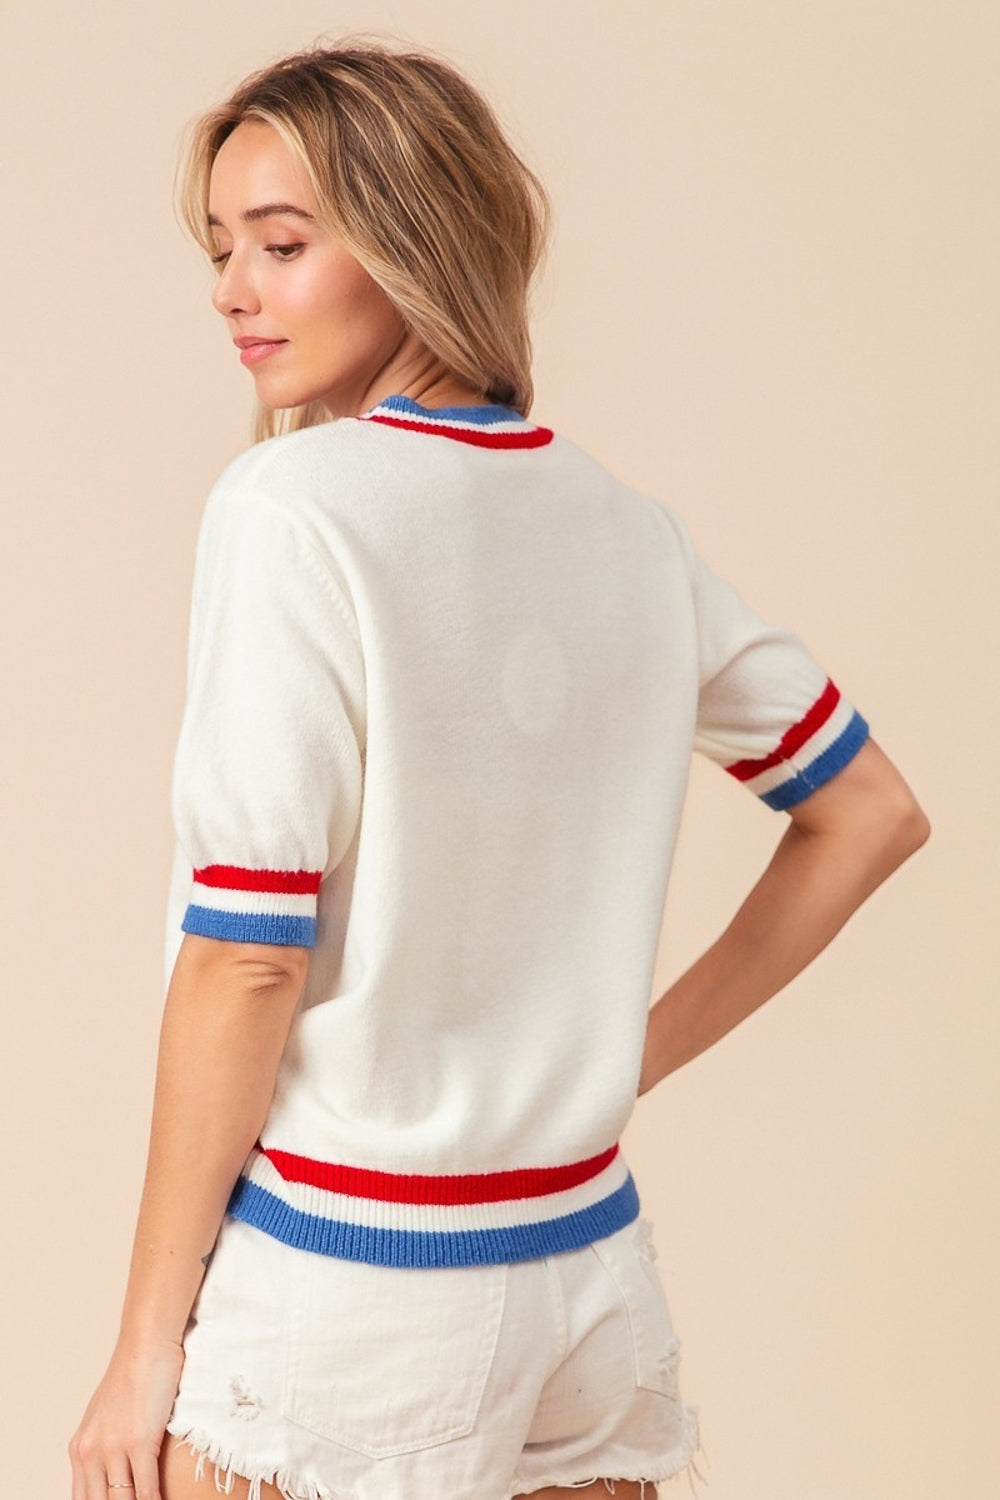 BiBi US Flag Theme Striped Heart Sweater Trendsi